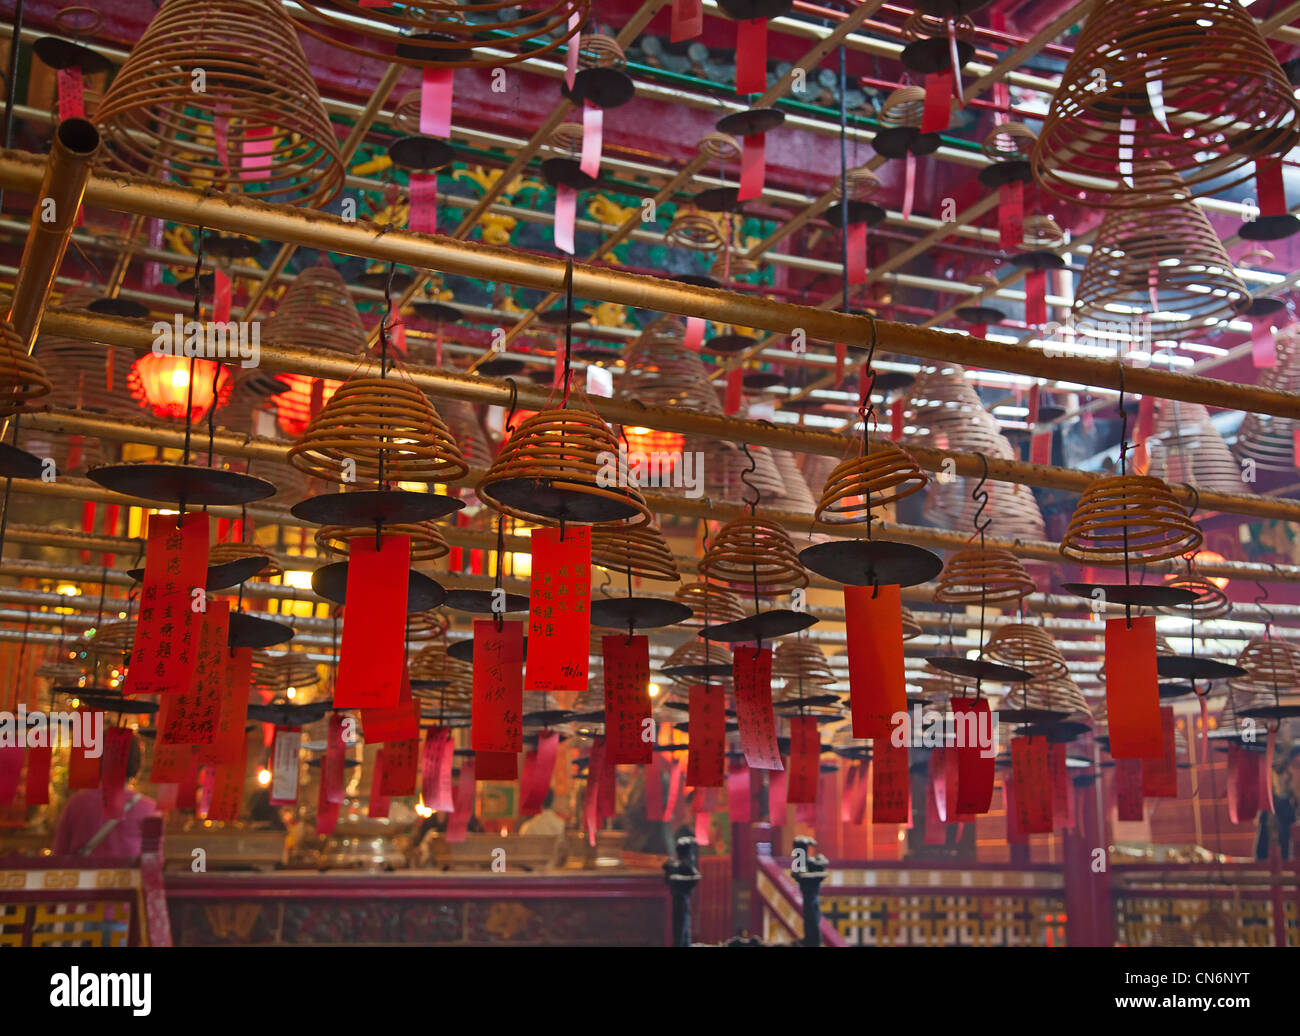 Man Mo temple in Hong Kong Stock Photo